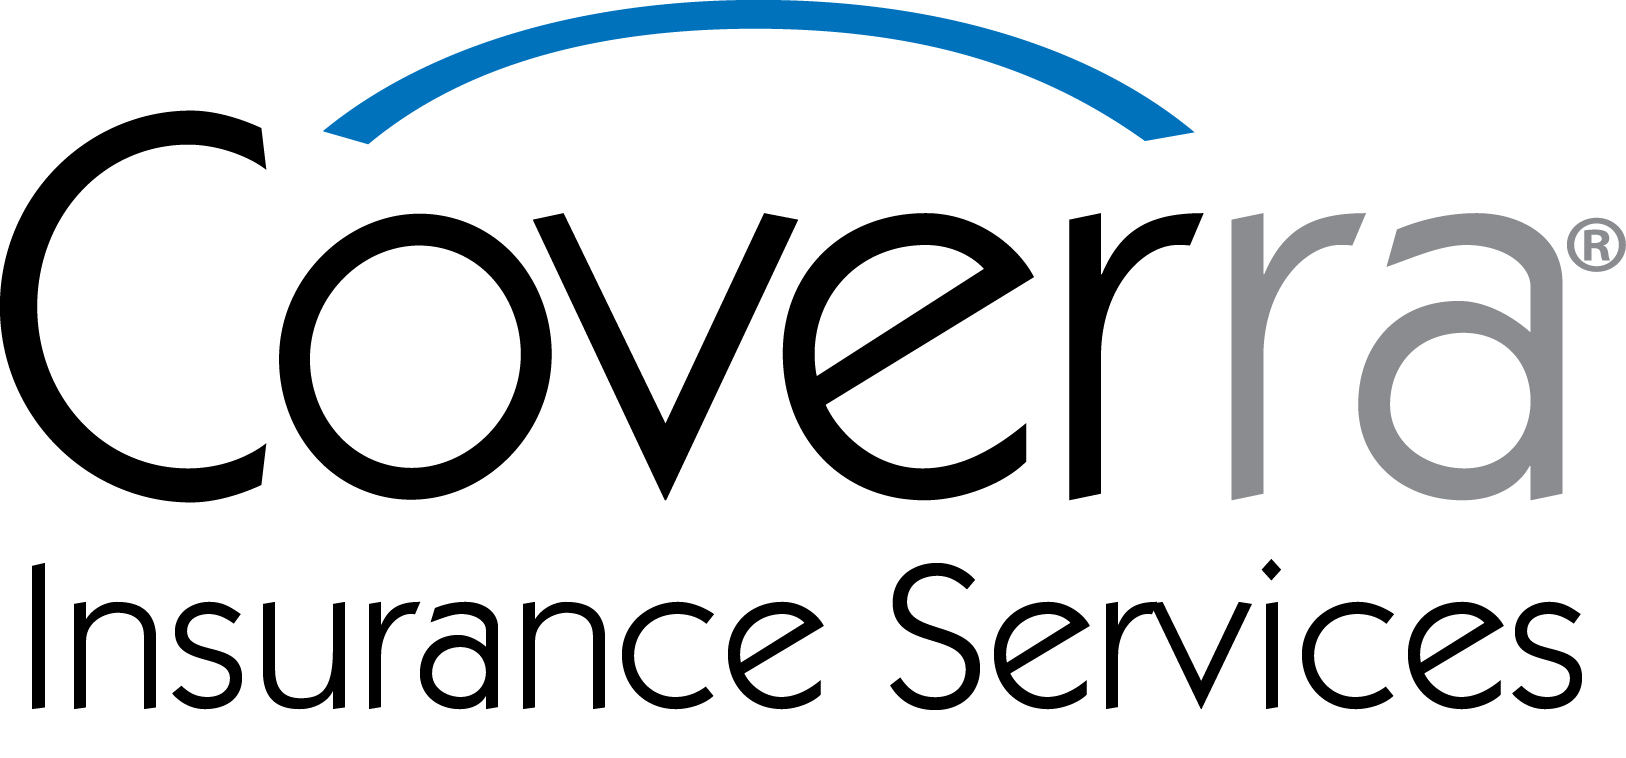 Coverra Insurance Services, Inc.